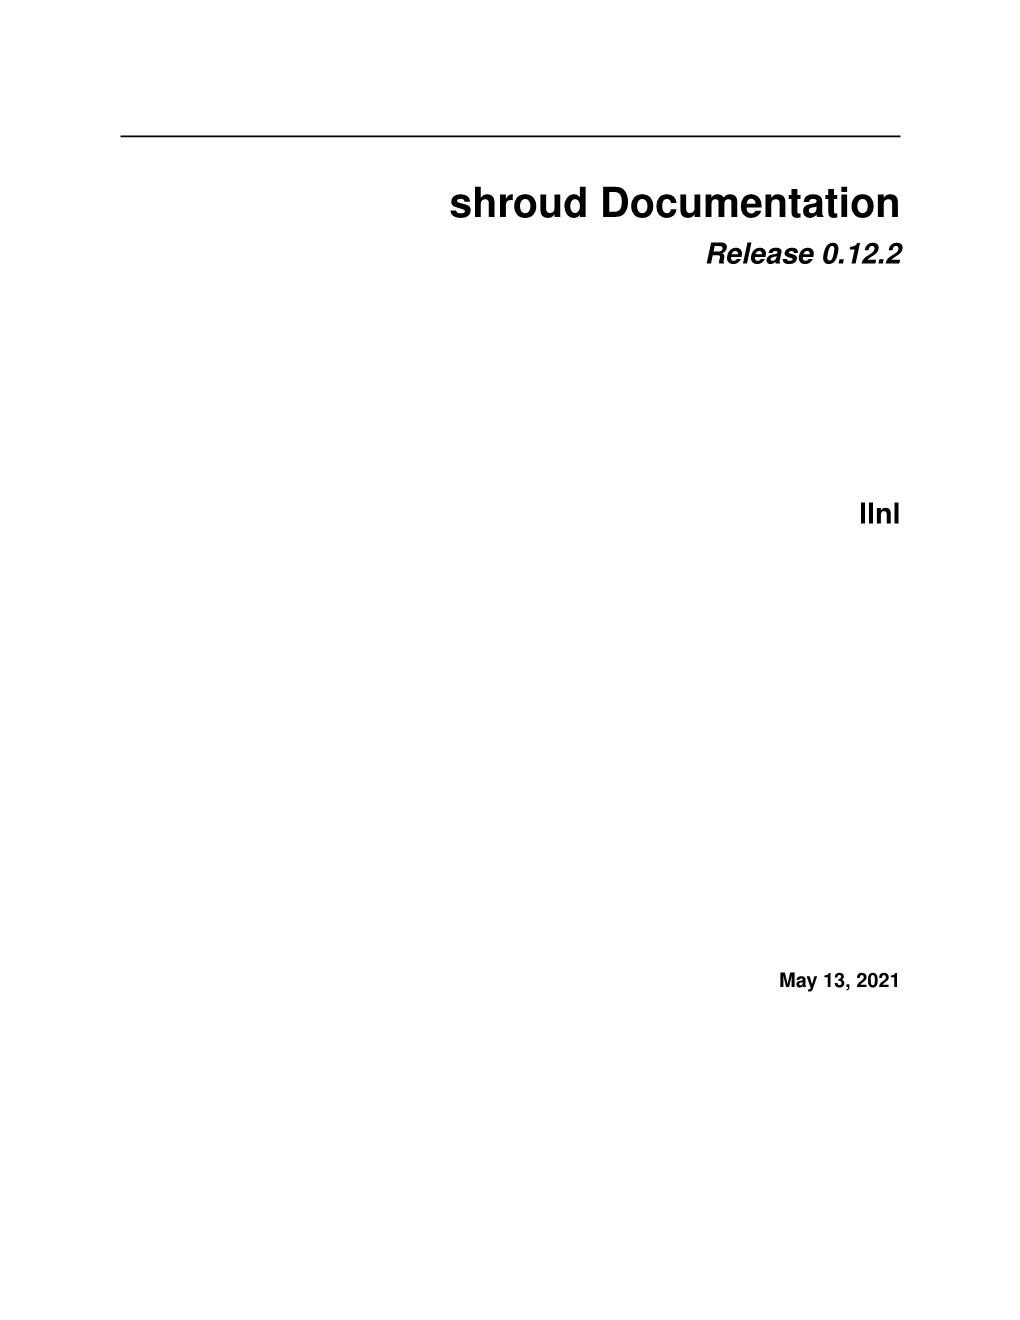 Shroud Documentation Release 0.12.2